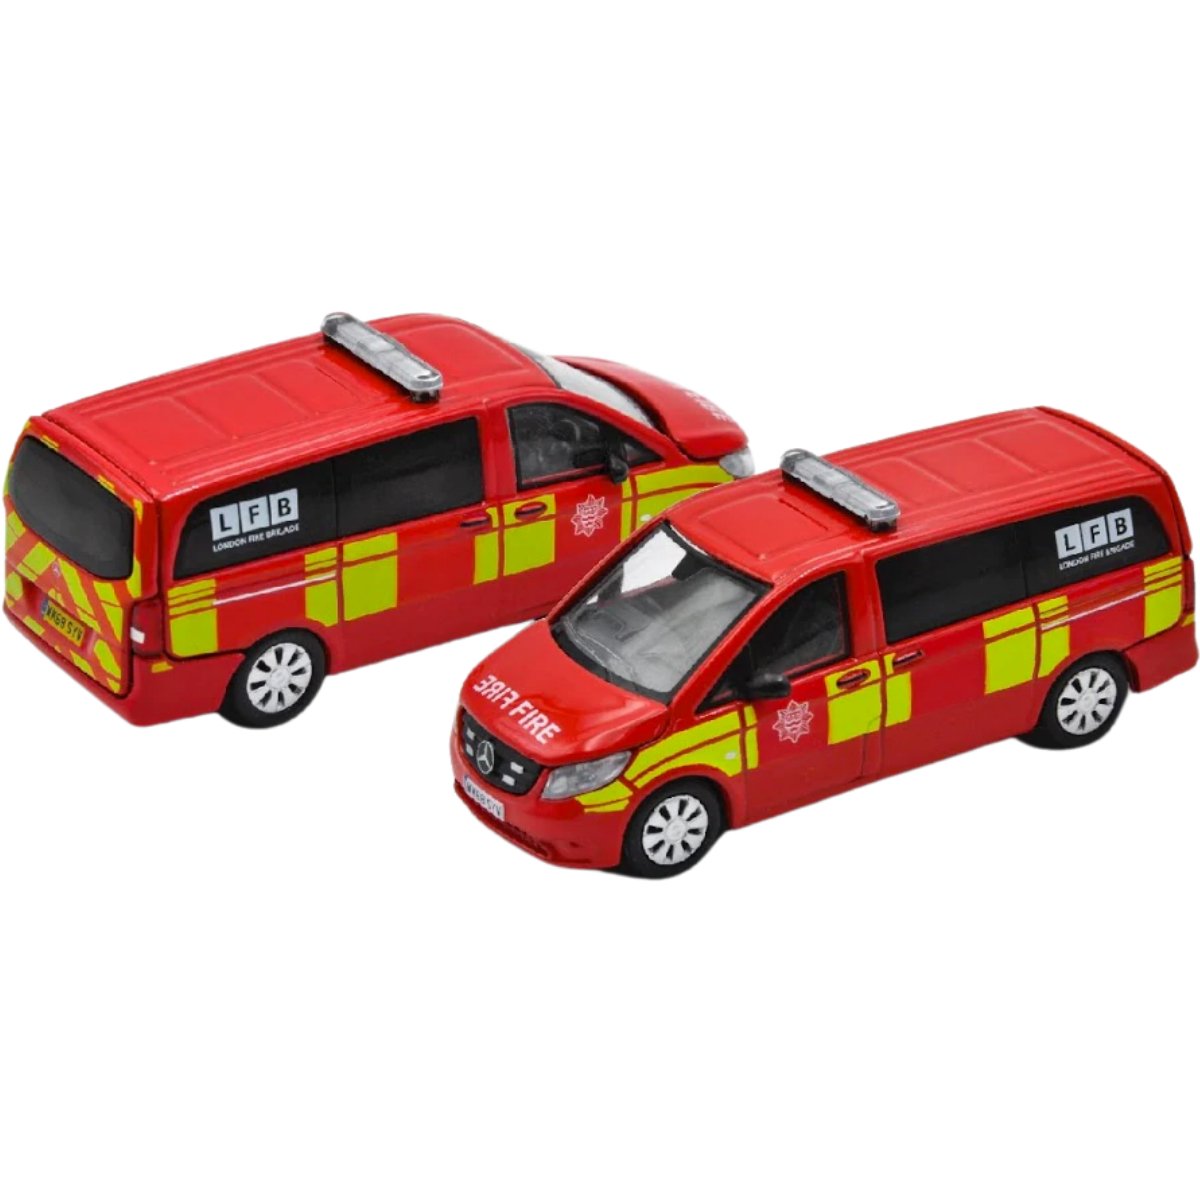 Era Car Mercedes Benz Vito UK Fire Command Vehicle 1:64 Scale - London Fire Brigade Diecast Model